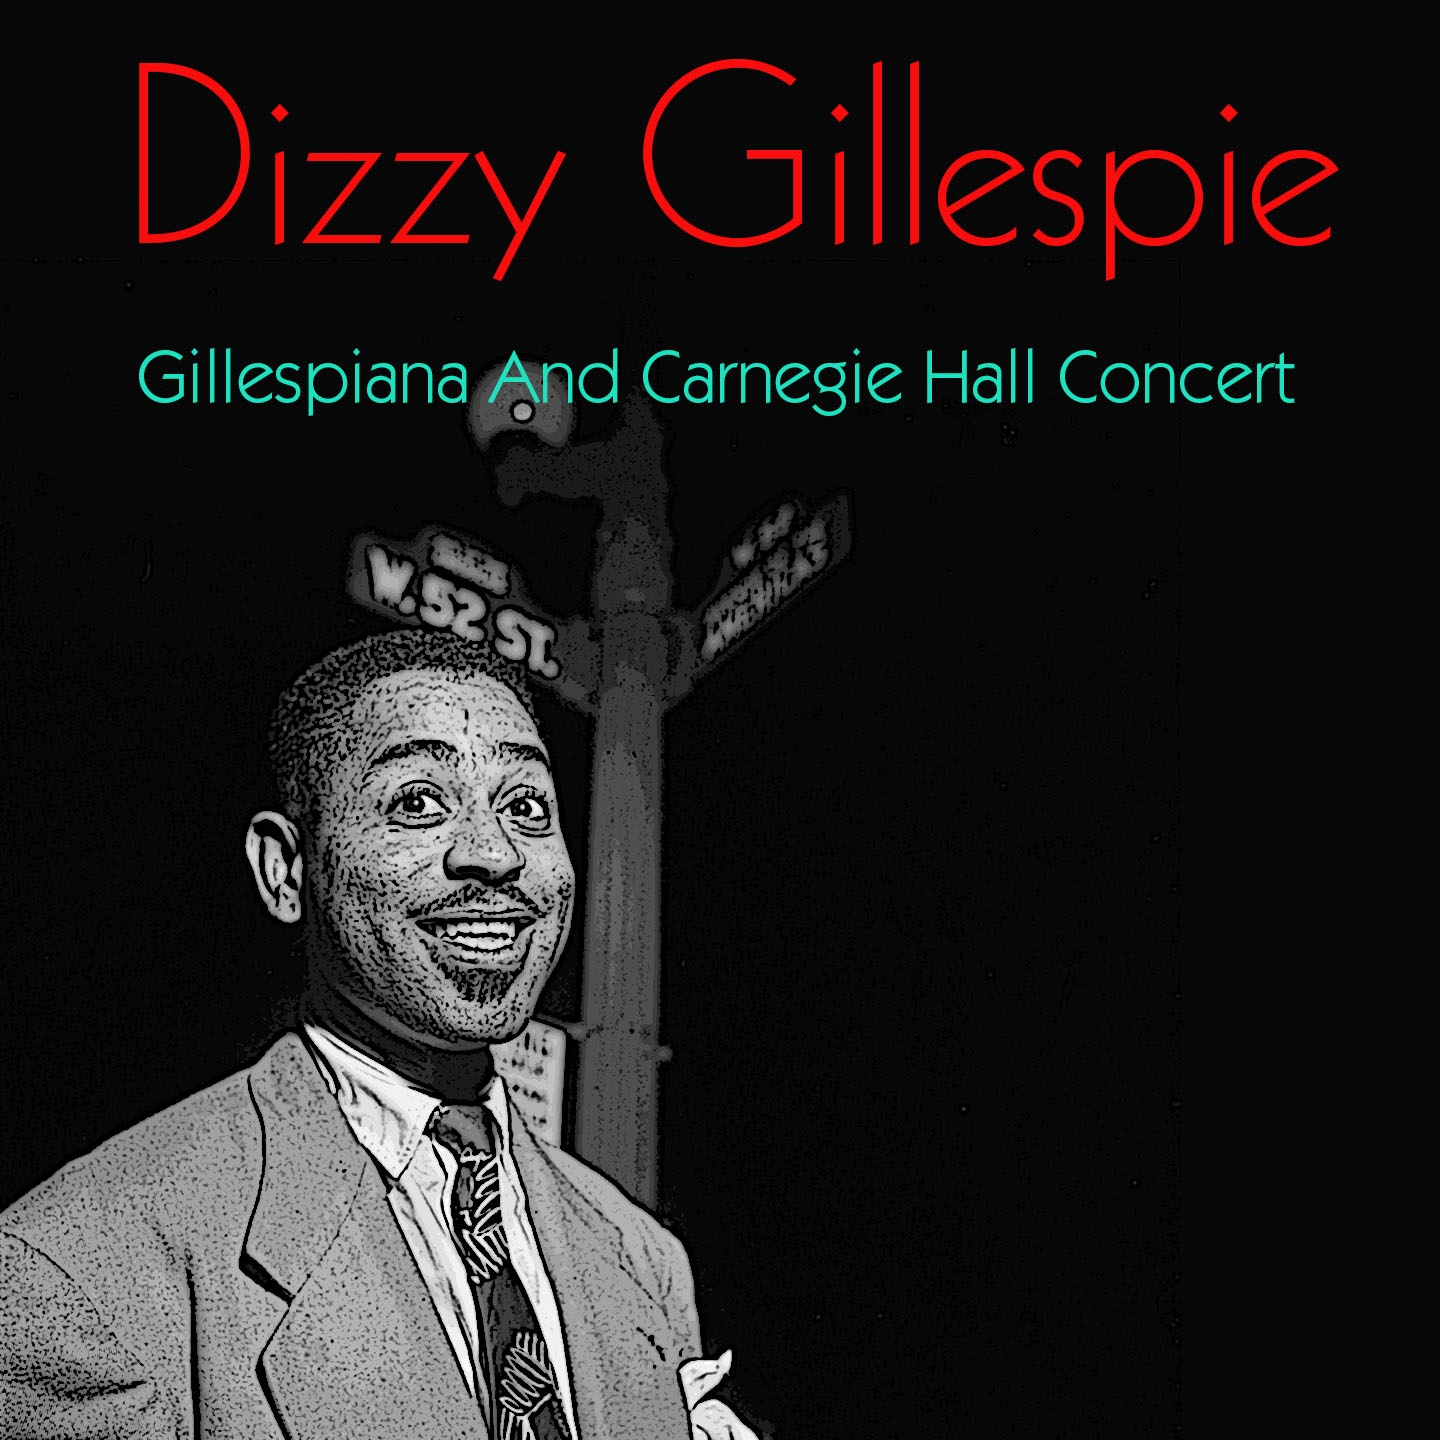 Dizzy Gillespie: Gillespiana and Carnegie Hall Concert